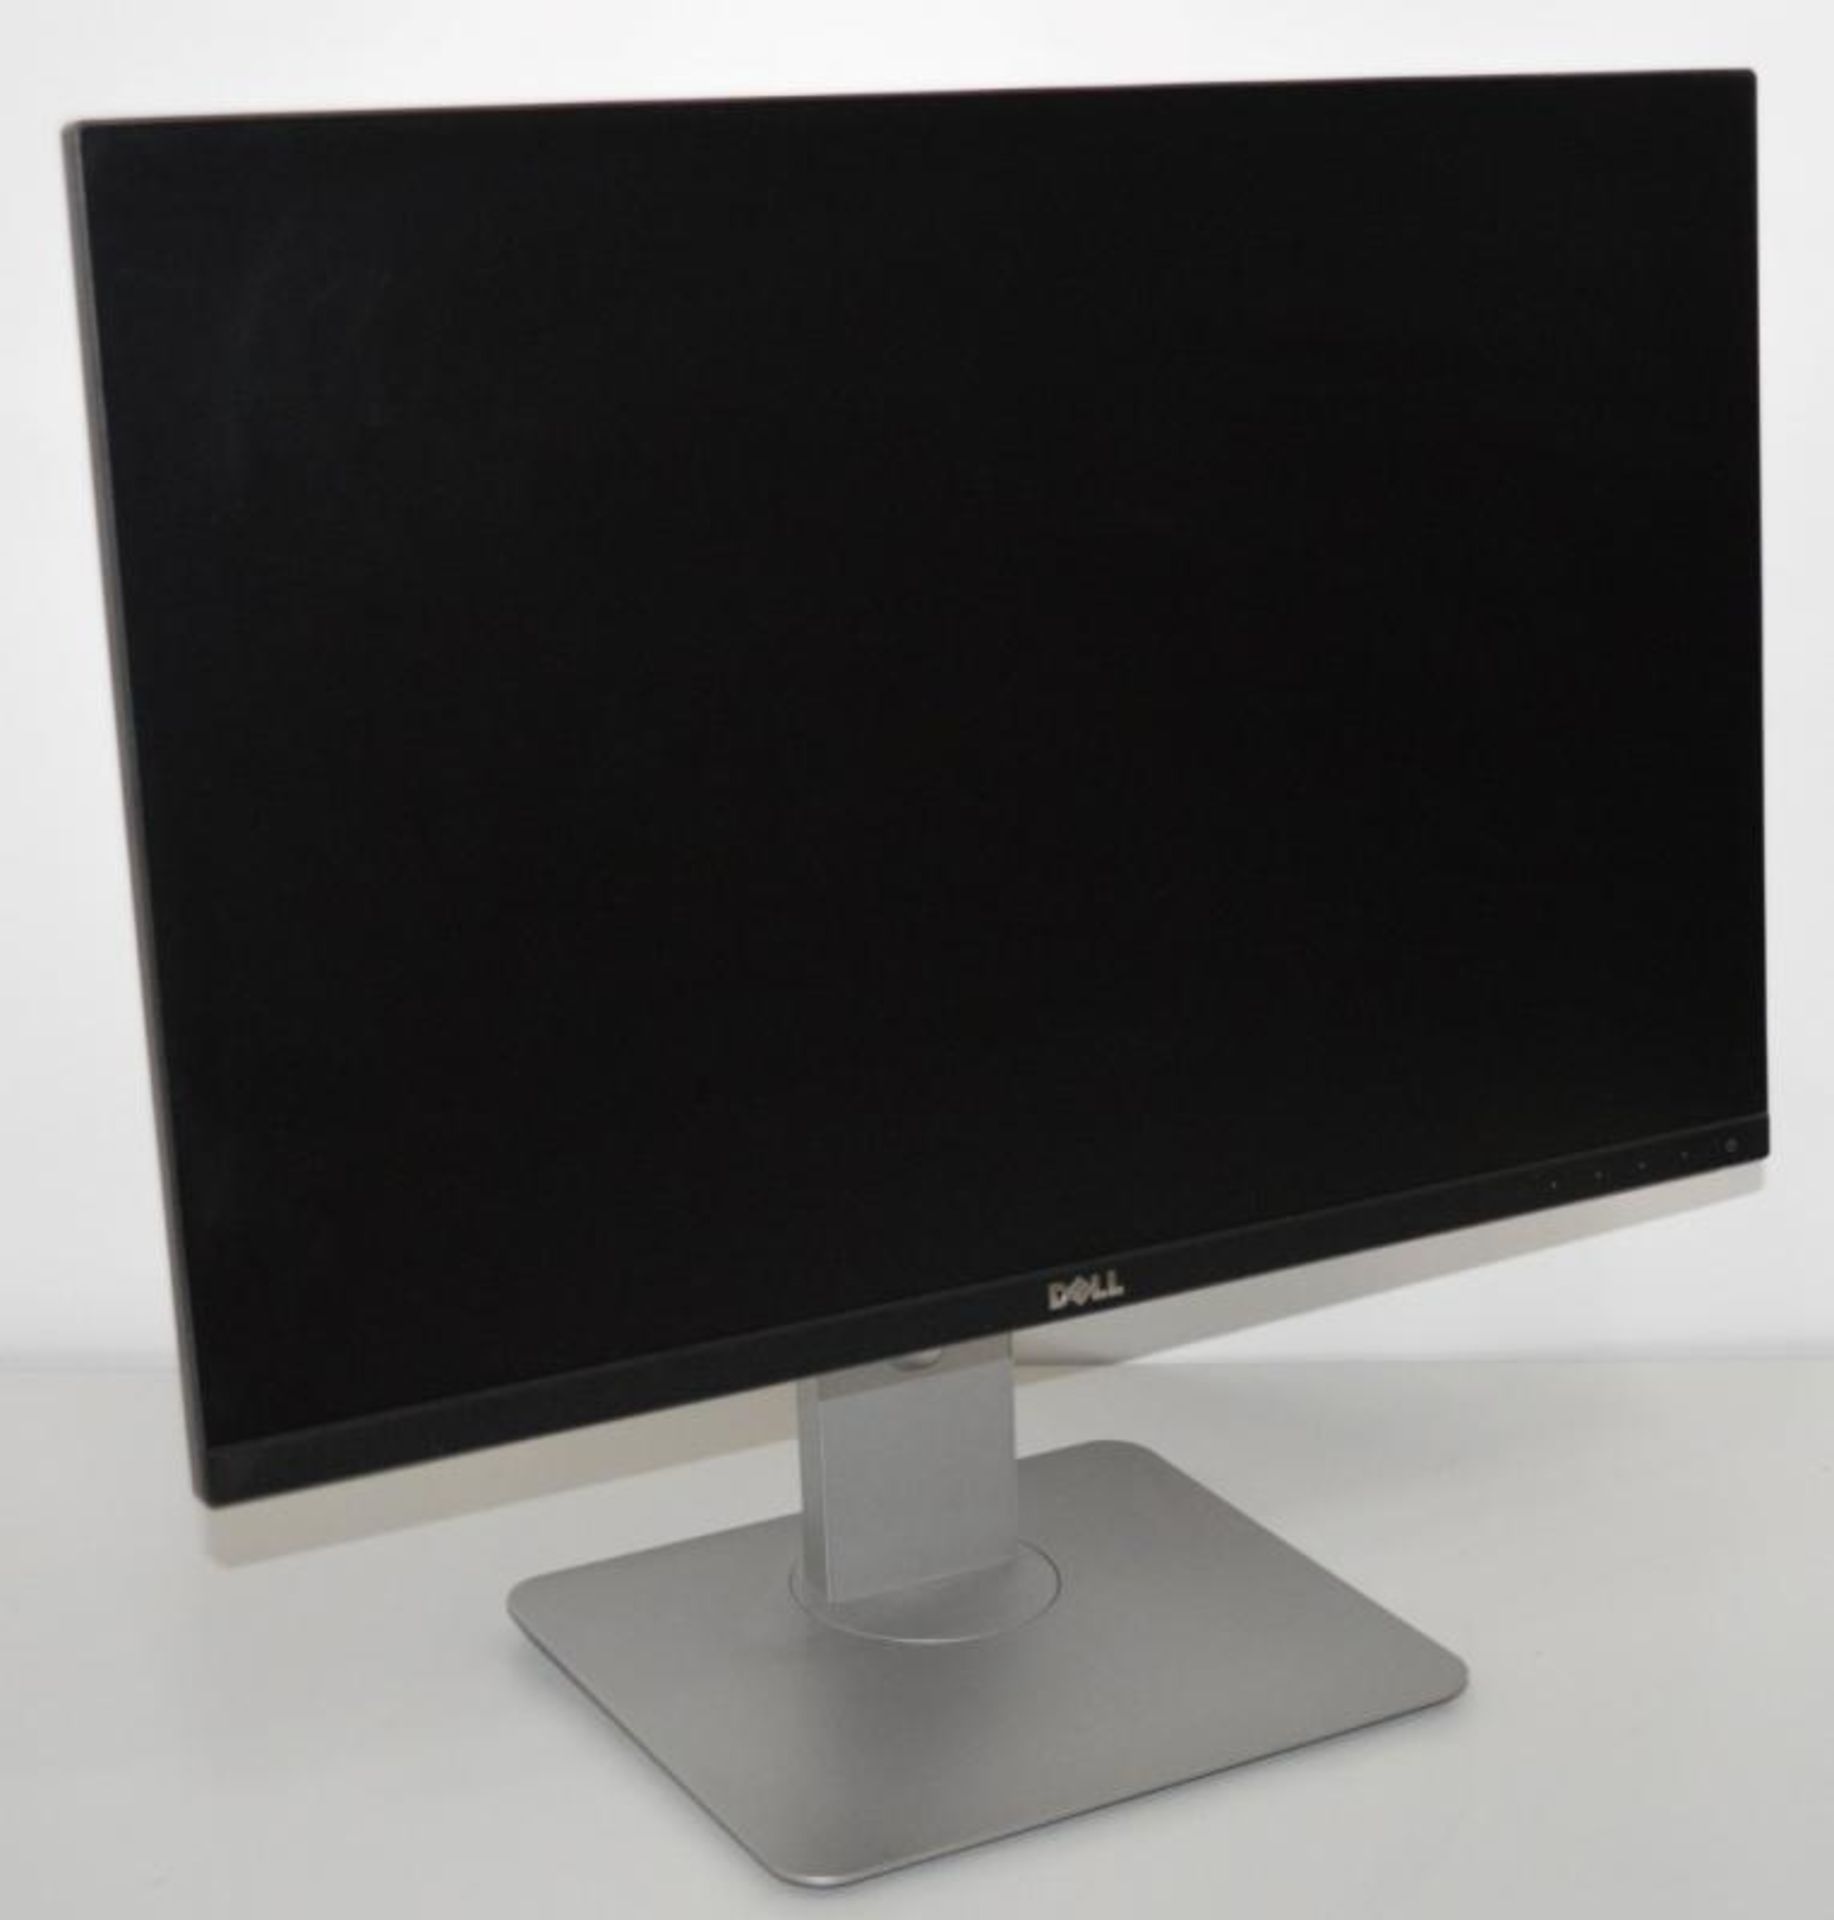 1 x Dell U2415B Ultrasharp FHD 24 Inch LED Flat Screen Monitor - 1920x1200 Resolution - Edge to Edge